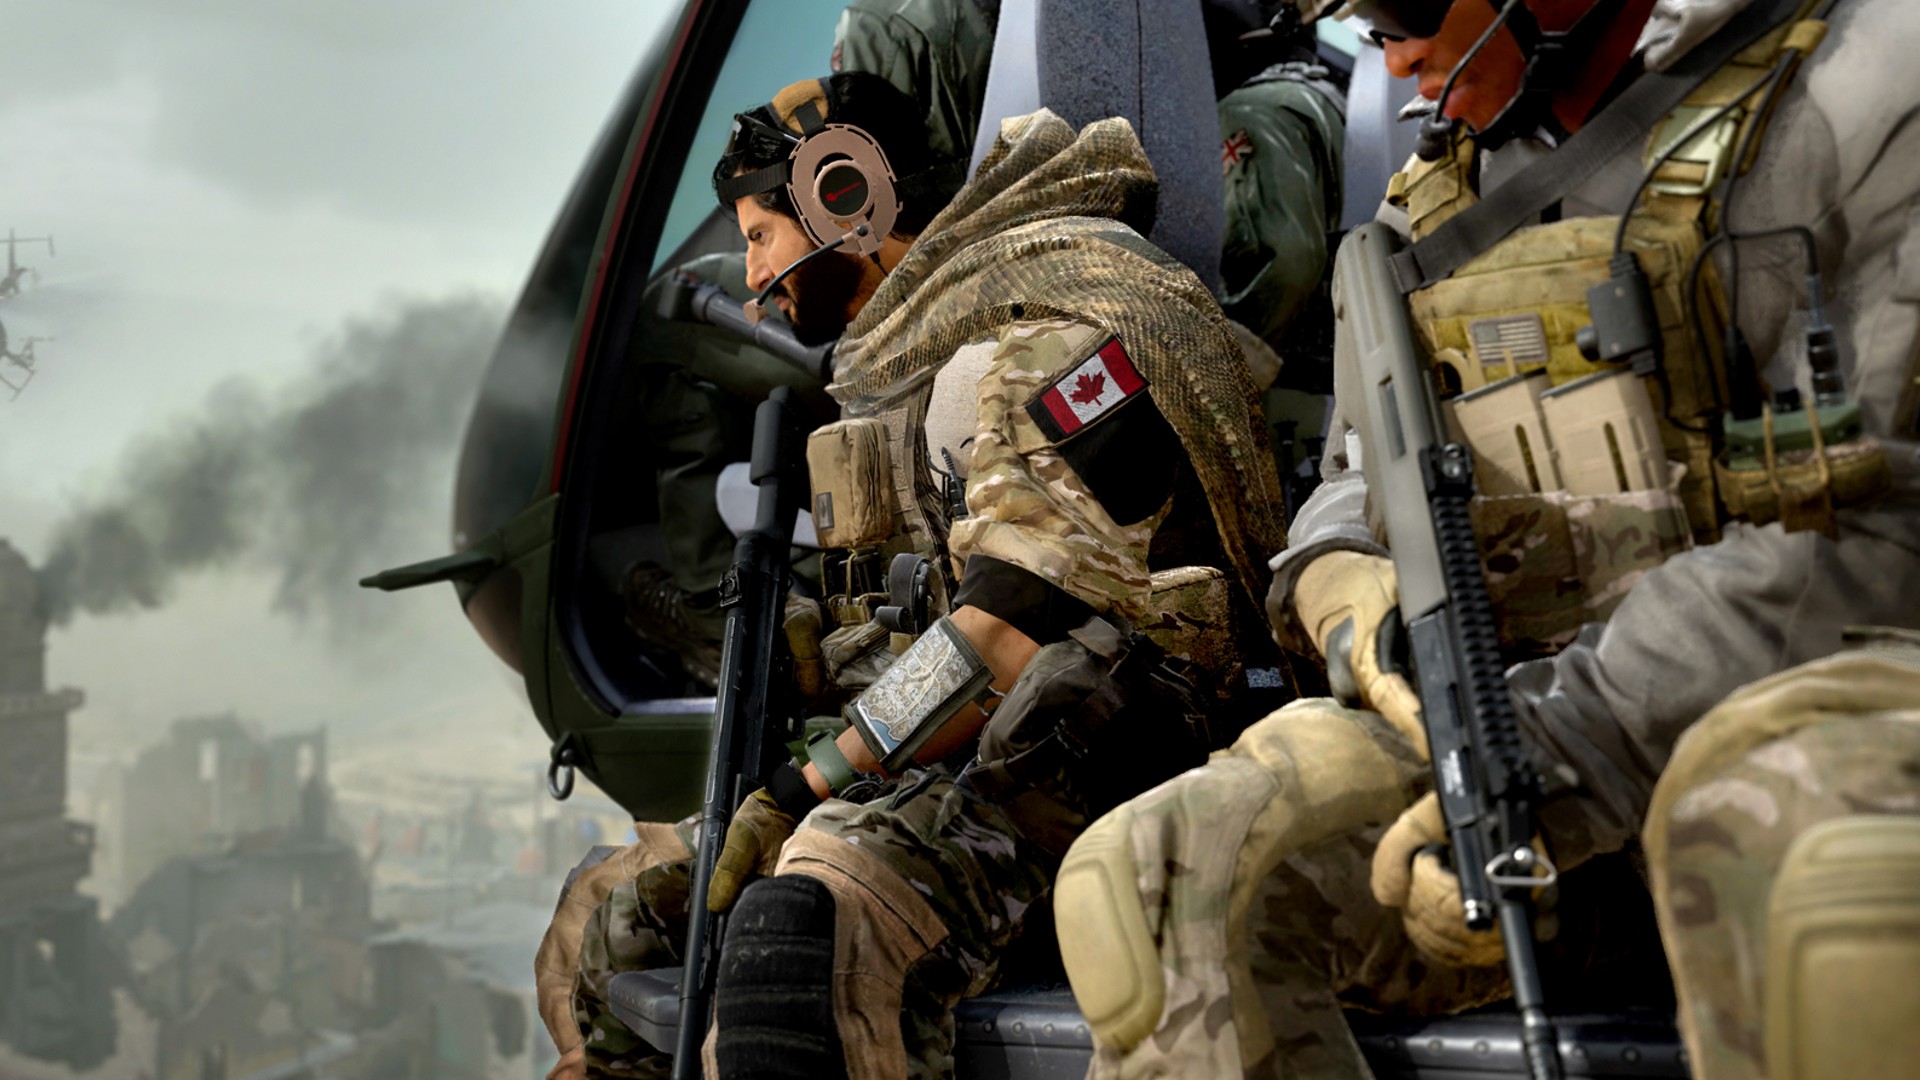 Modern Warfare 2 Beta Unlocks and Rewards